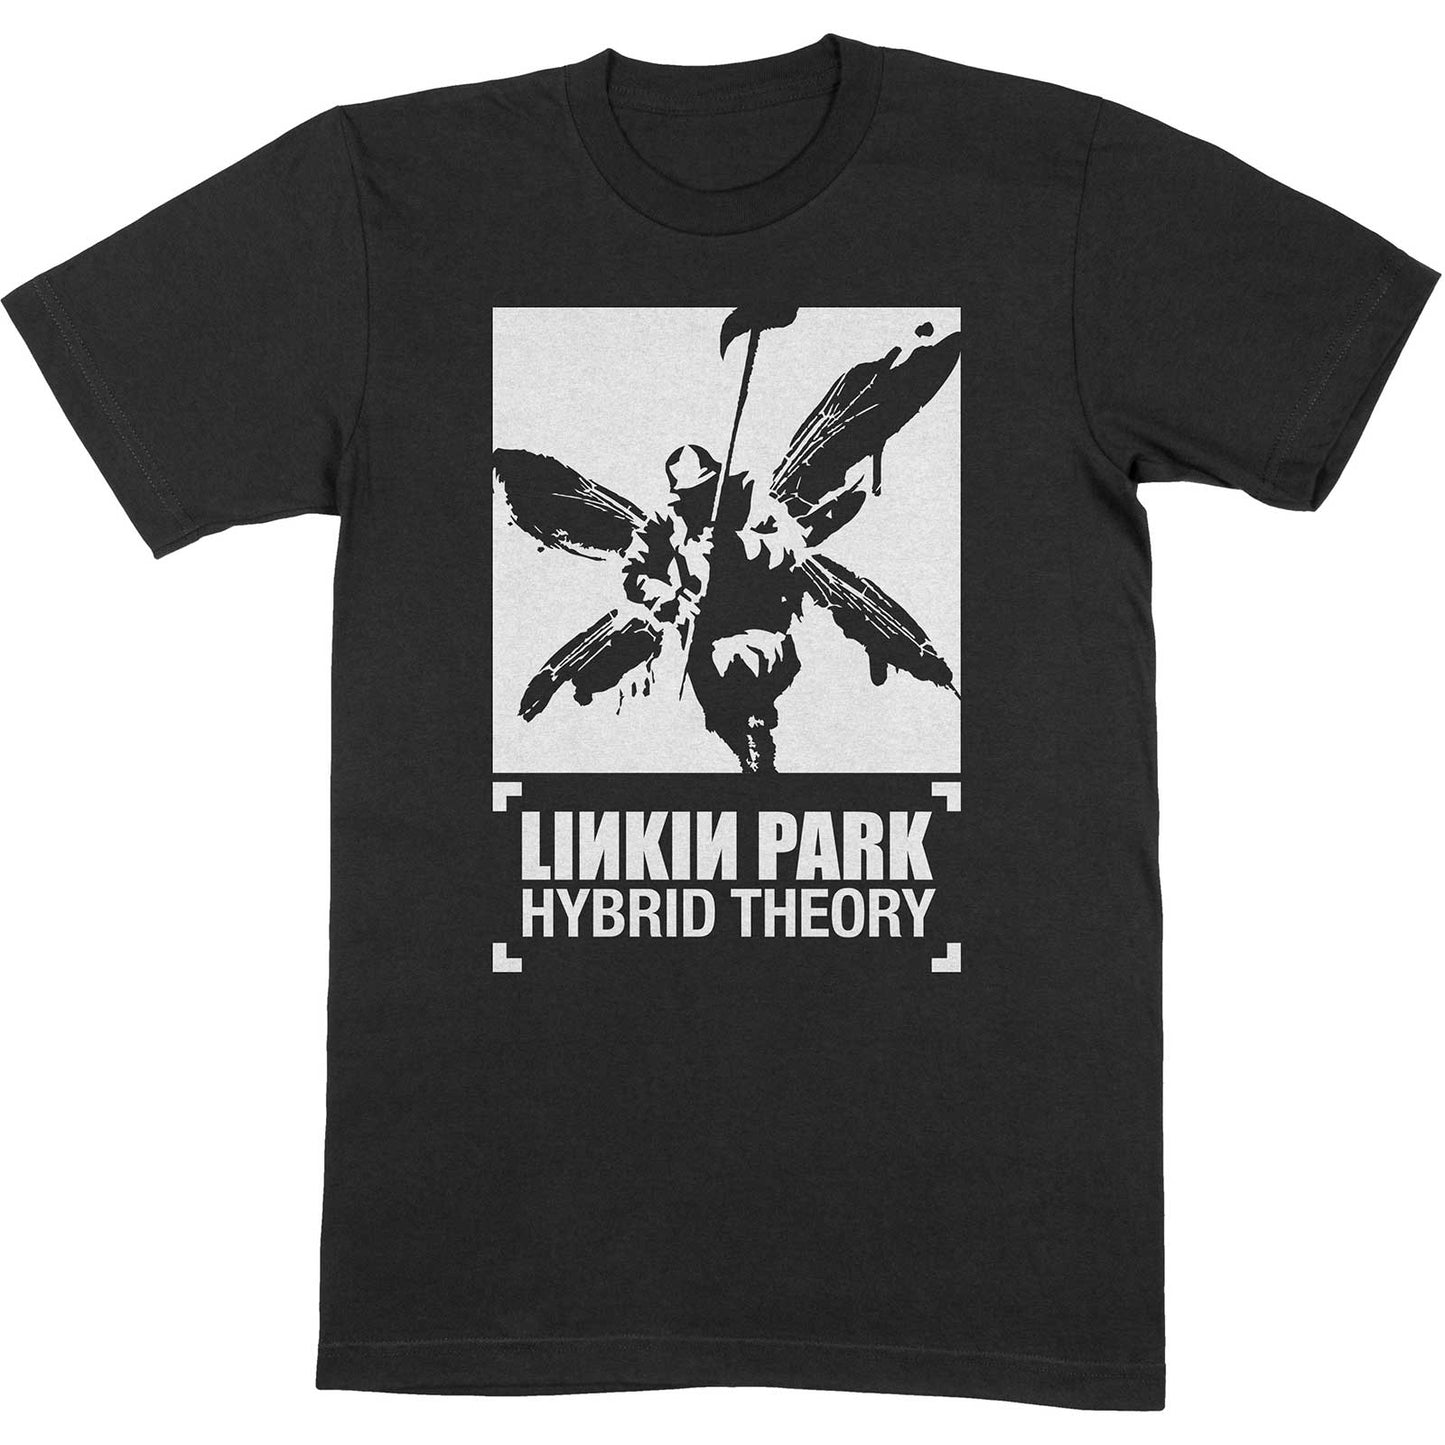 Linkin Park T-Shirt - Hybrid Theory (Unisex)